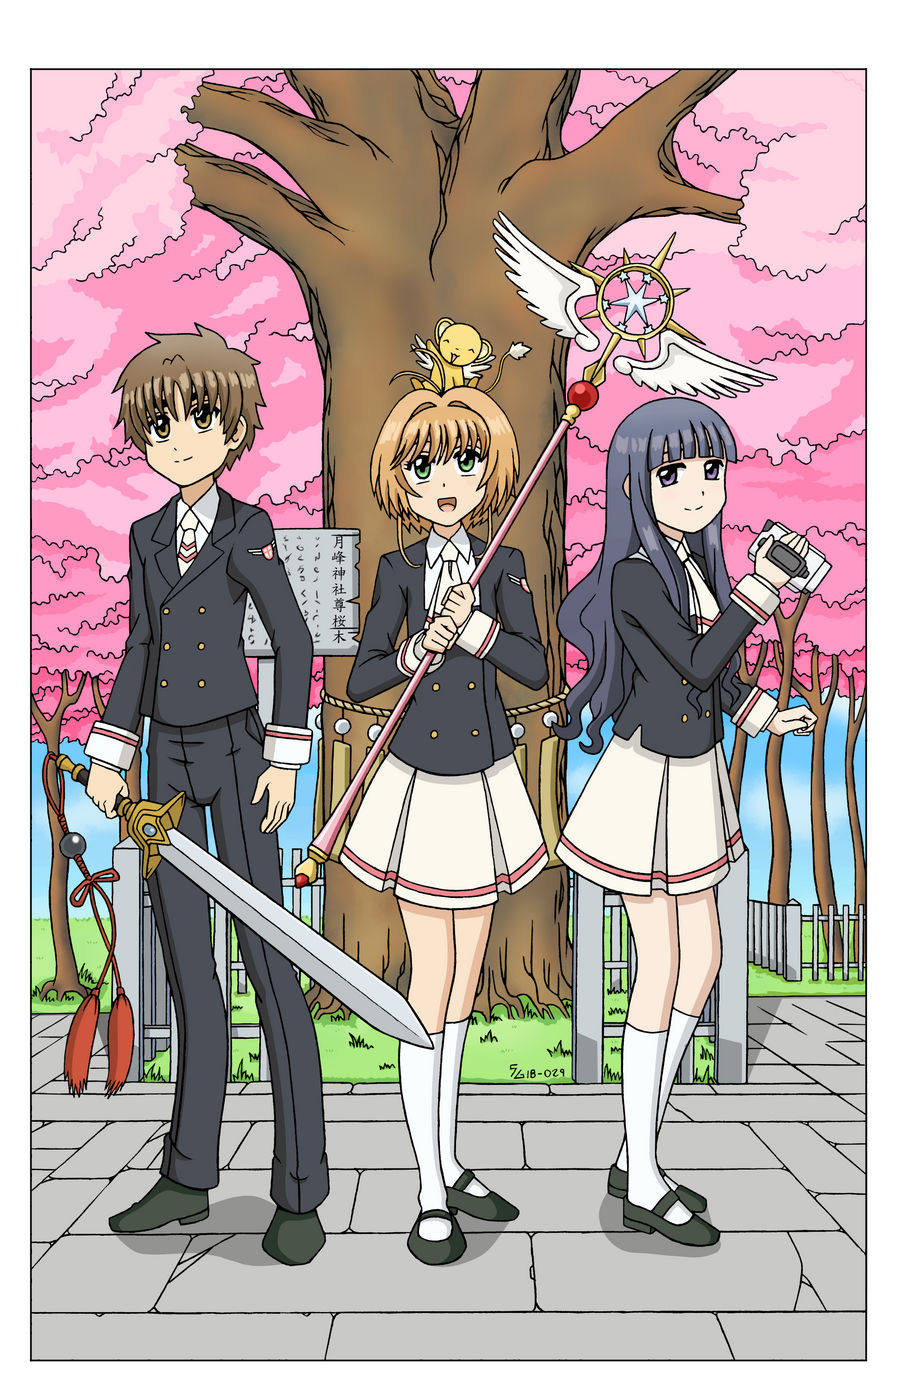 Sakura FR SCH-025 Cardcaptor Sakura Card Captor Anime Card